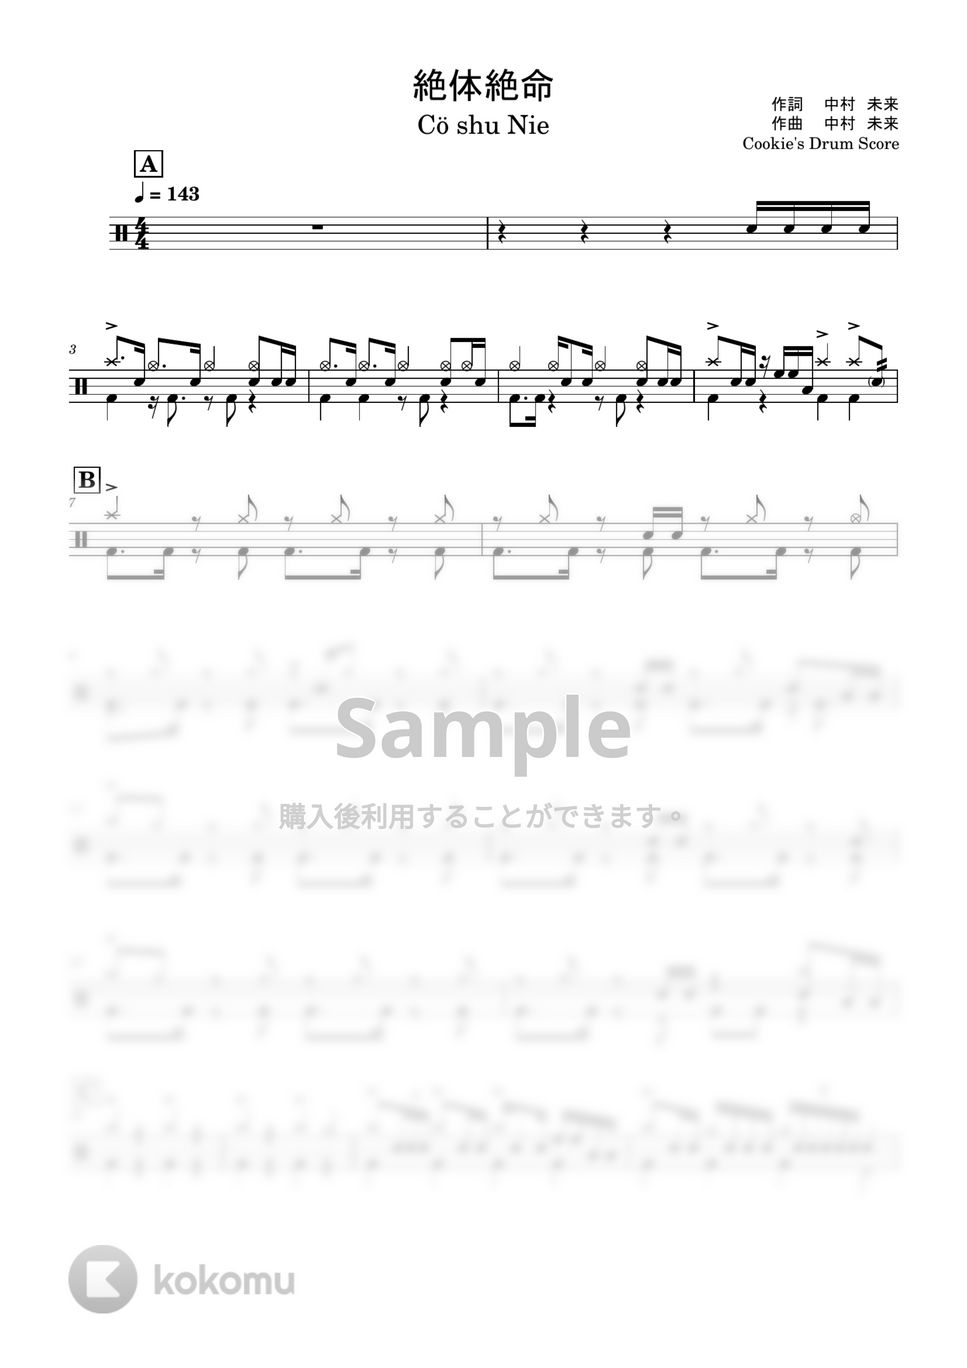 Cö shu Nie - 絶体絶命 by Cookie's Drum Score